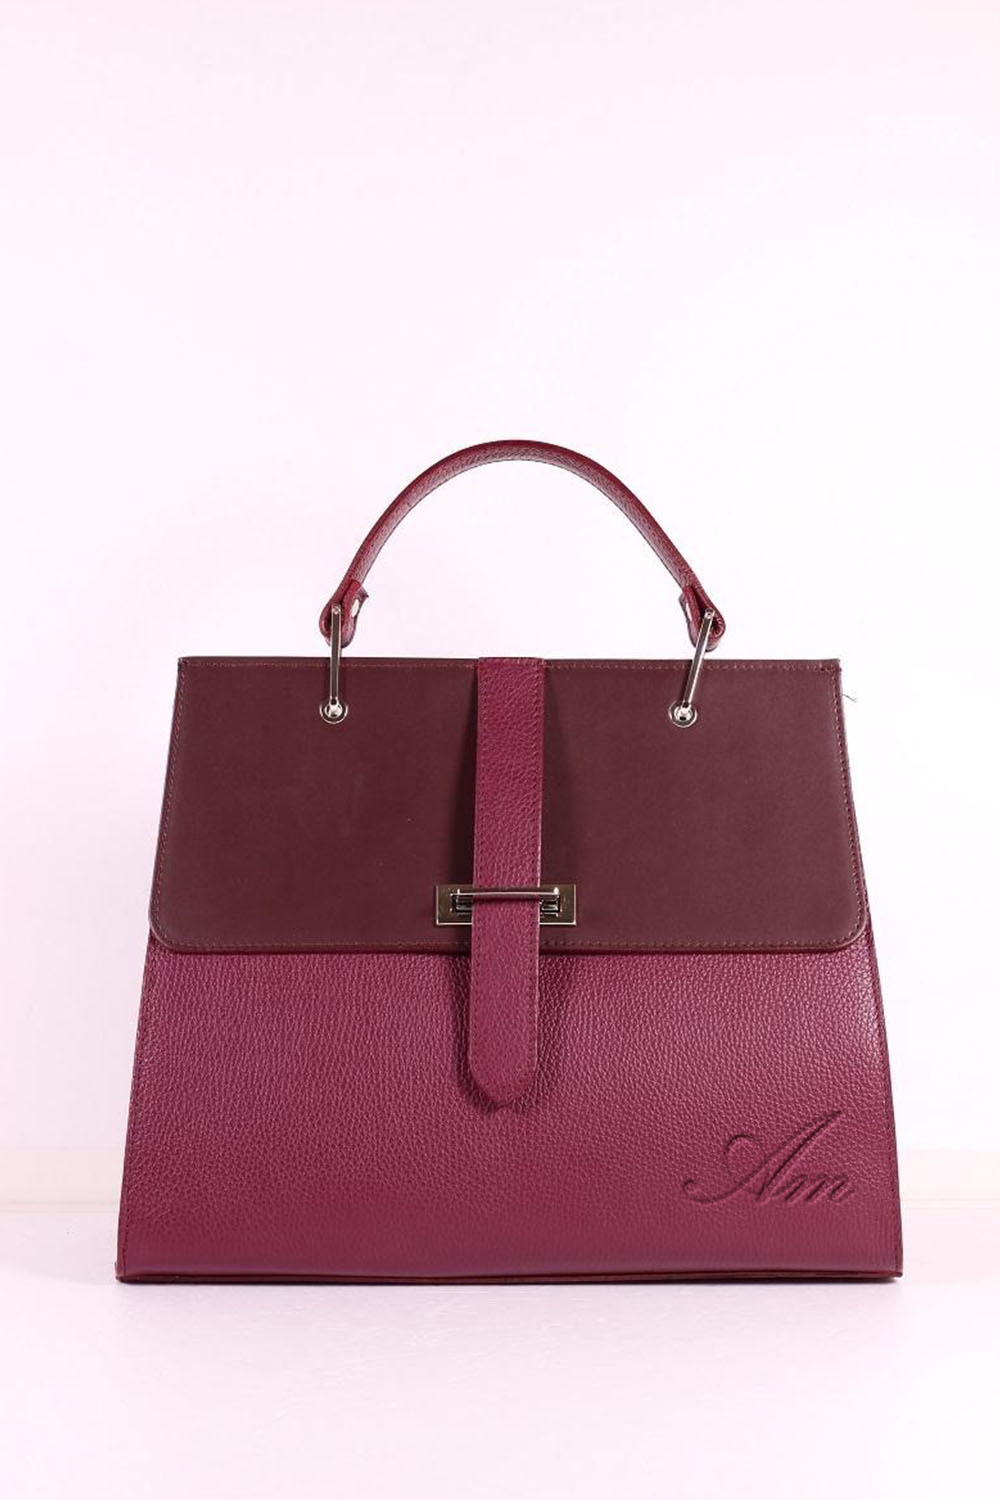 Alti Mora top luxury women handbag : Chic BB